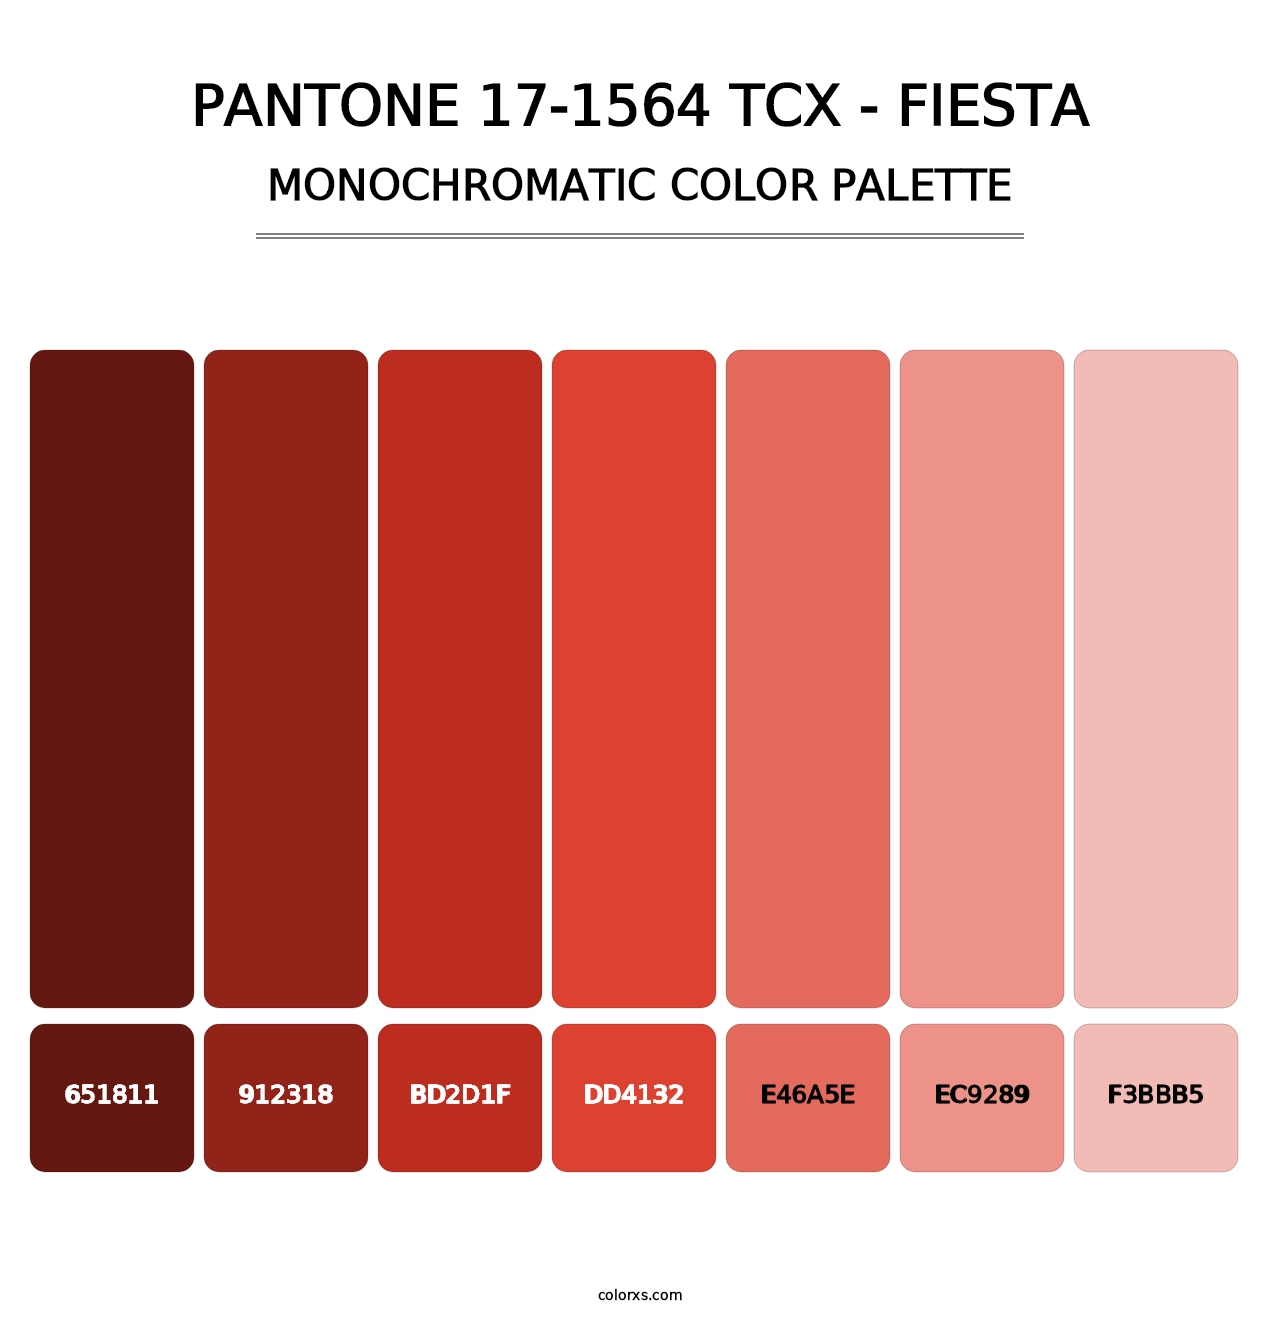 PANTONE 17-1564 TCX - Fiesta - Monochromatic Color Palette